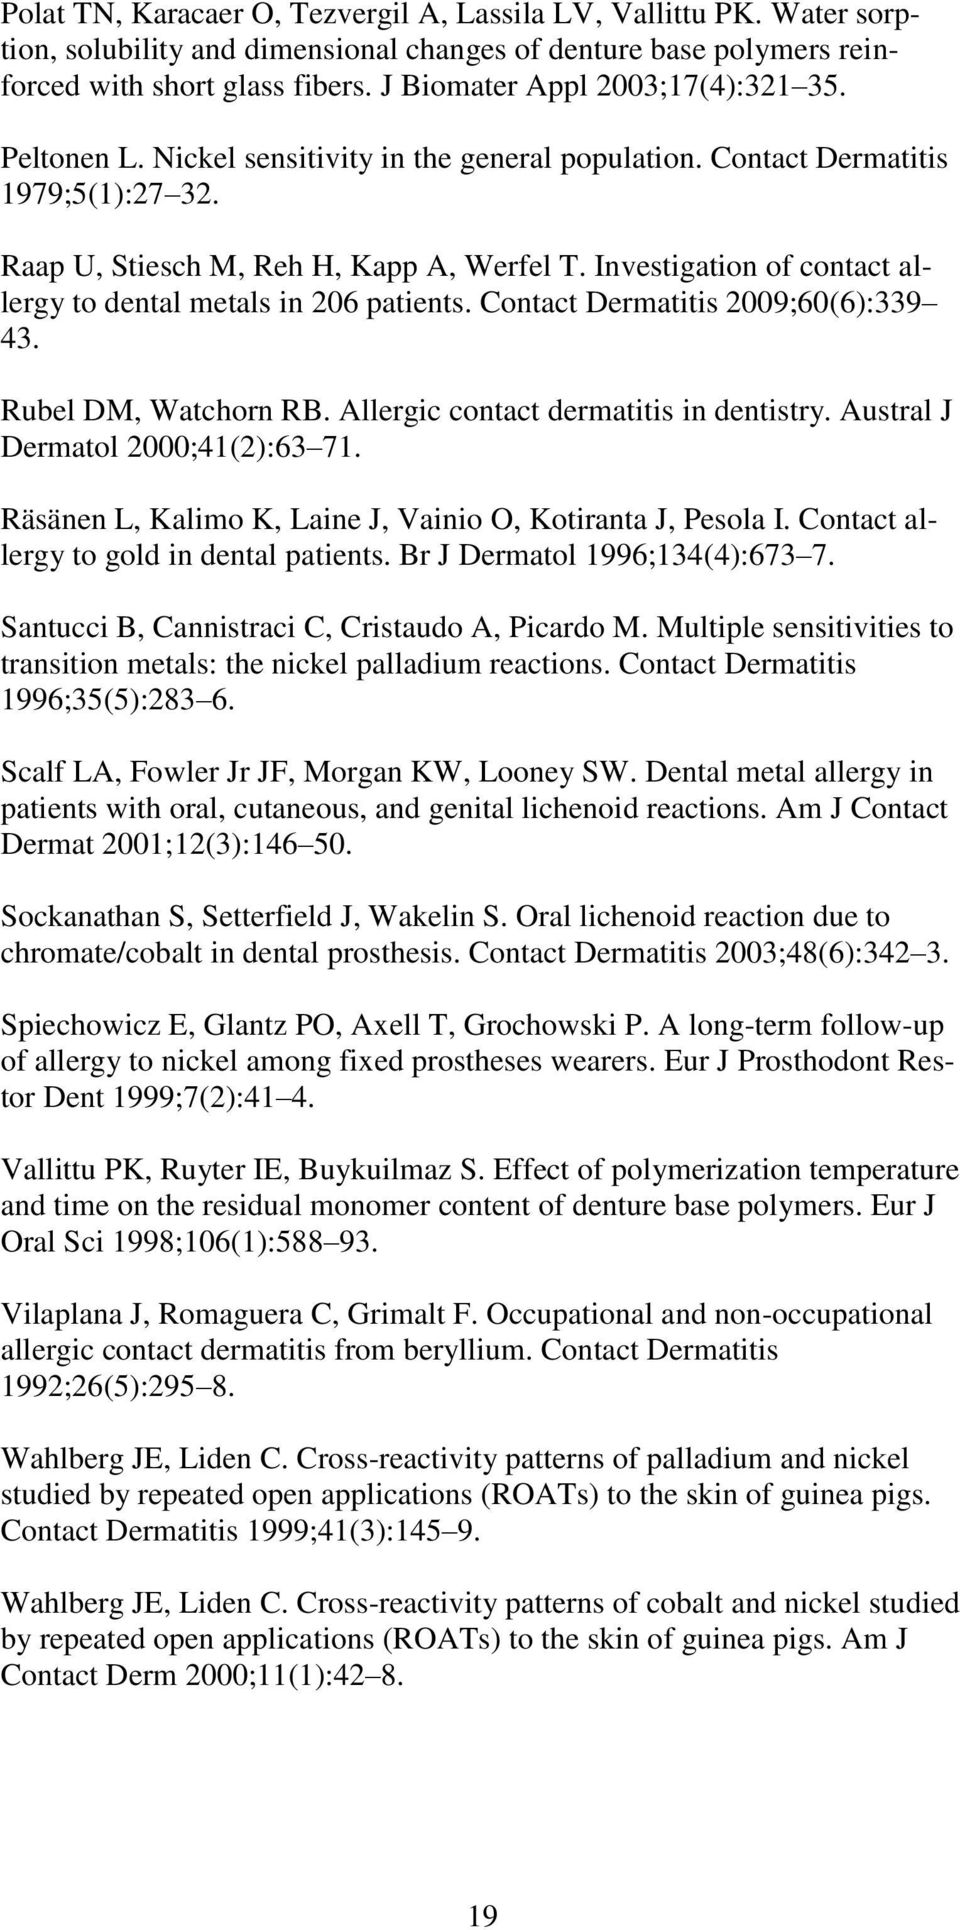 Investigation of contact allergy to dental metals in 206 patients. Contact Dermatitis 2009;60(6):339 43. Rubel DM, Watchorn RB. Allergic contact dermatitis in dentistry.